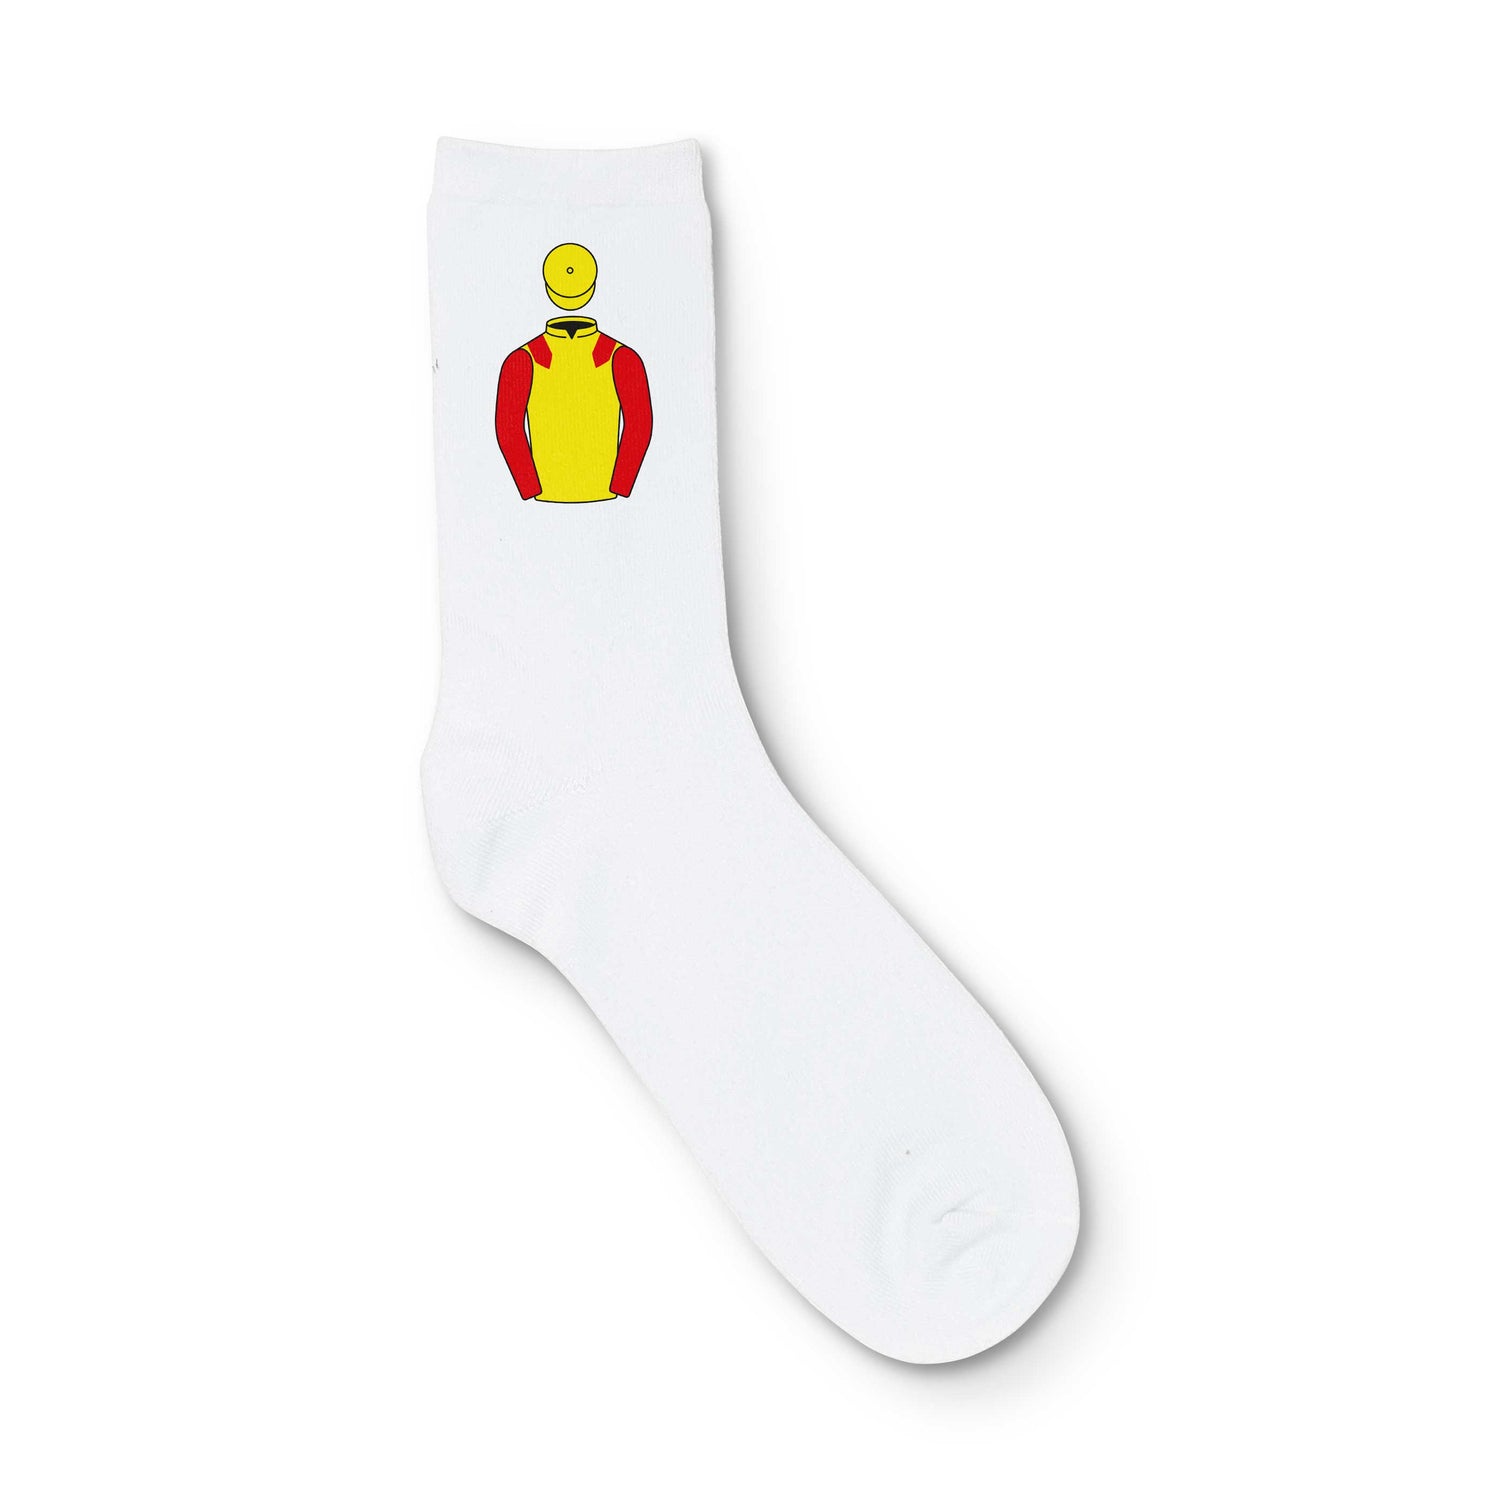 Anamoine Limited Printed Sock - Printed Sock - Hacked Up